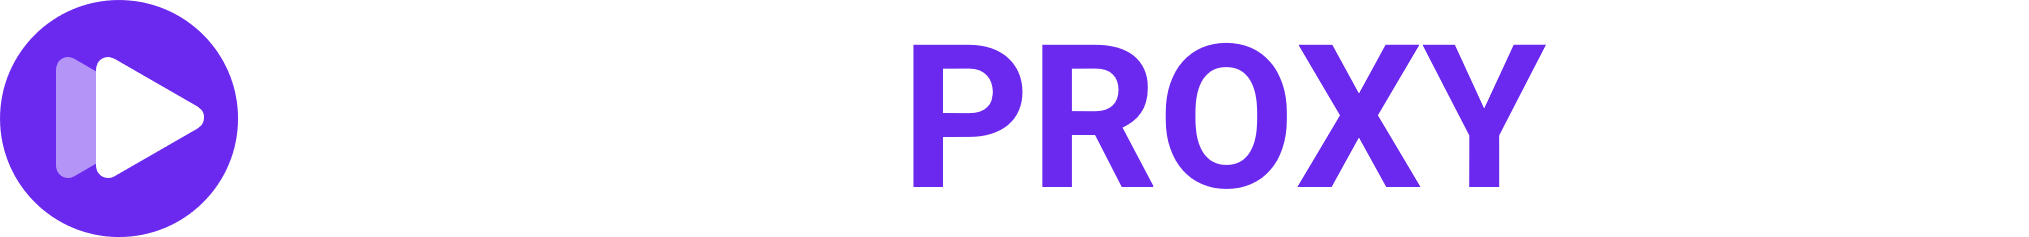 GameProxy logo